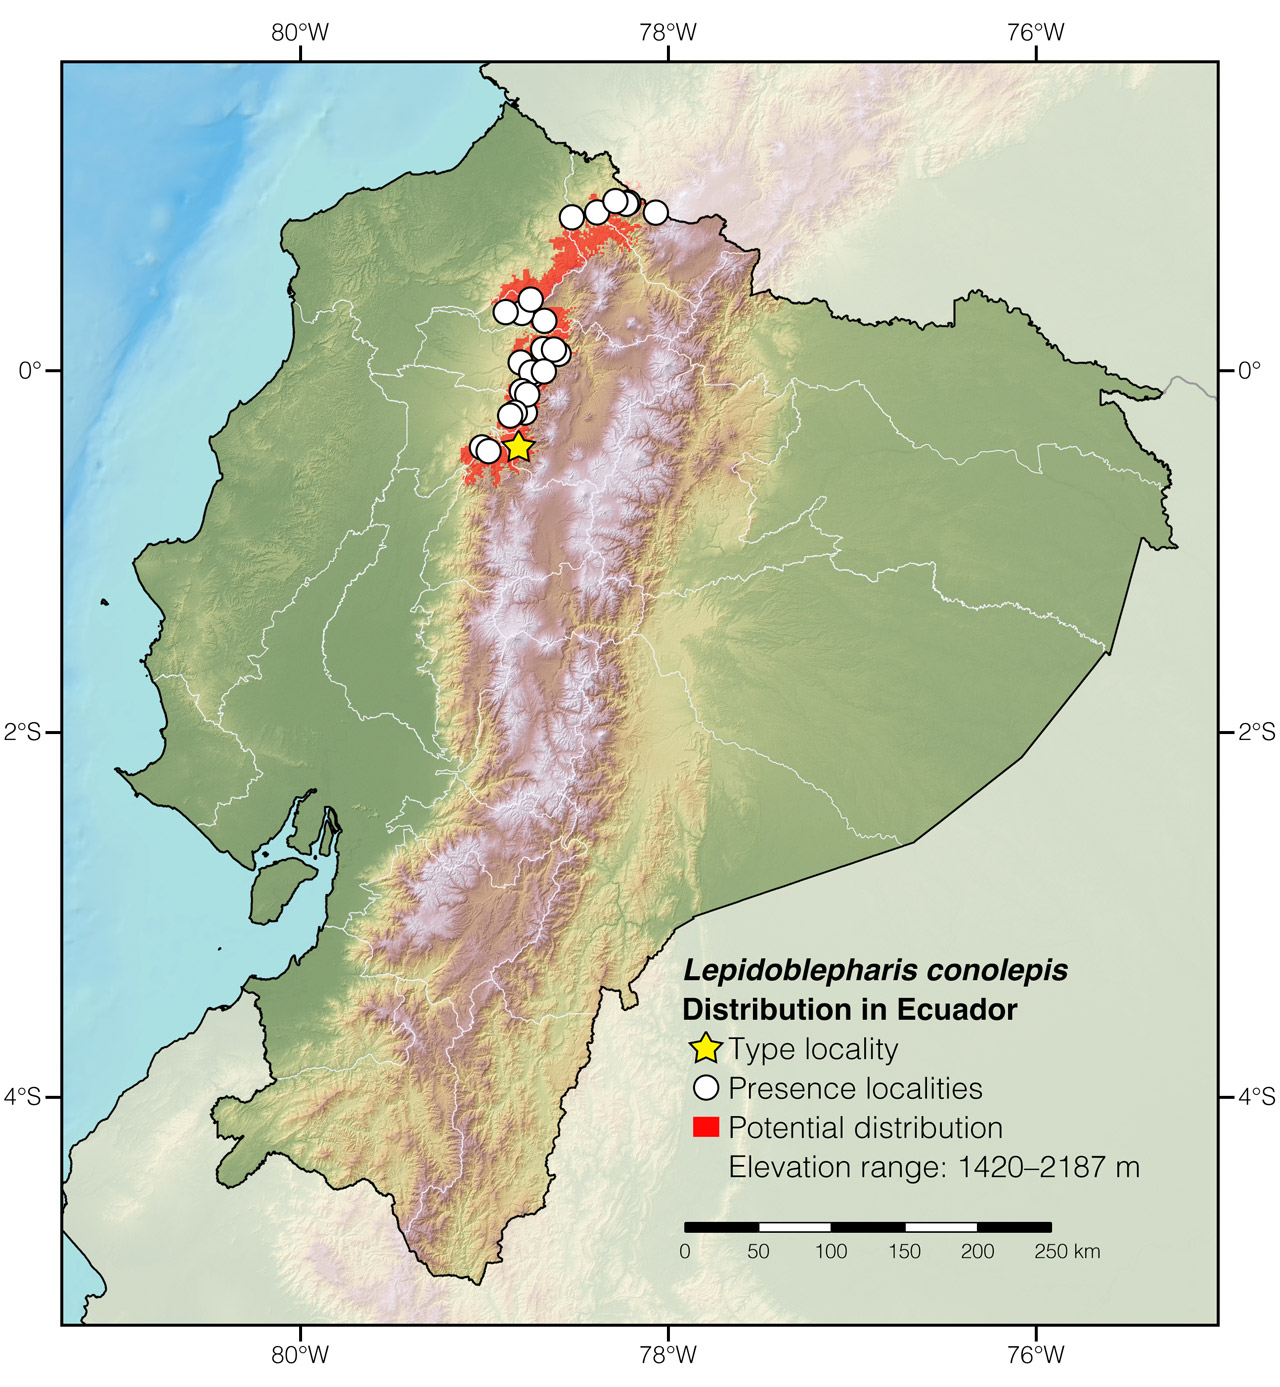 Distribution of Lepidoblepharis conolepis in Ecuador